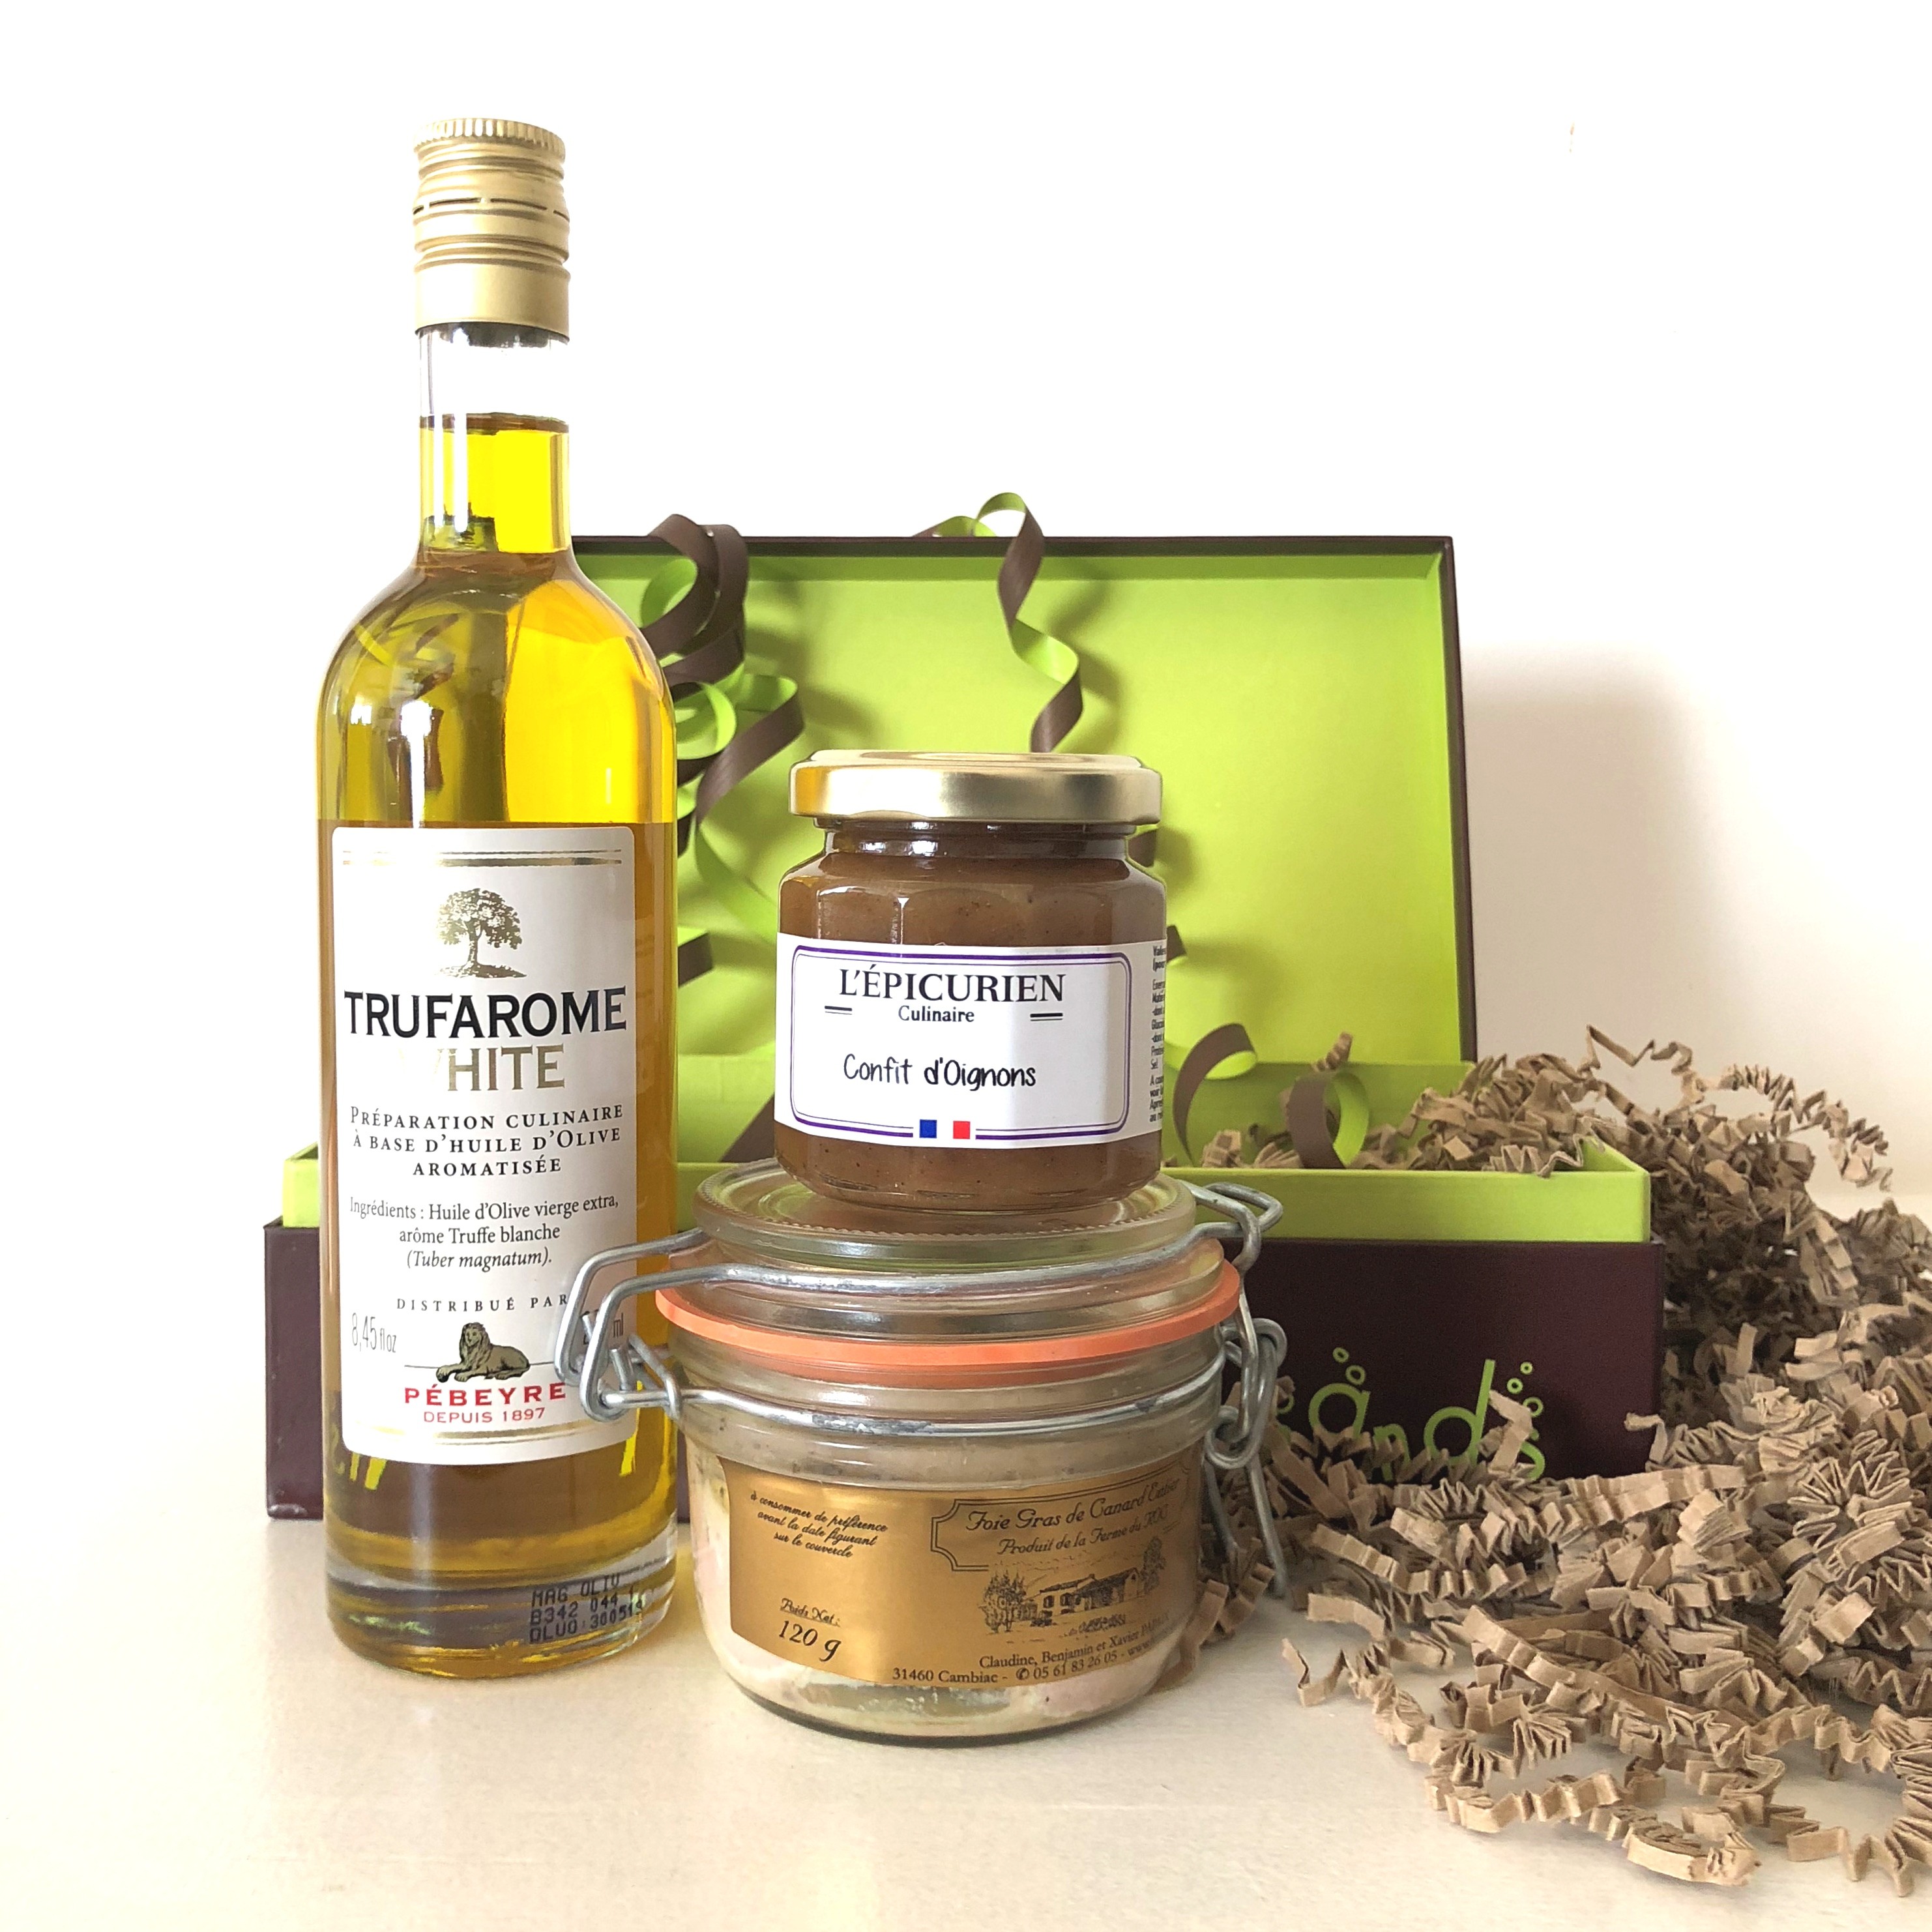 Huile d'olive à la truffe blanche - 250ml | Faye Gastronomie